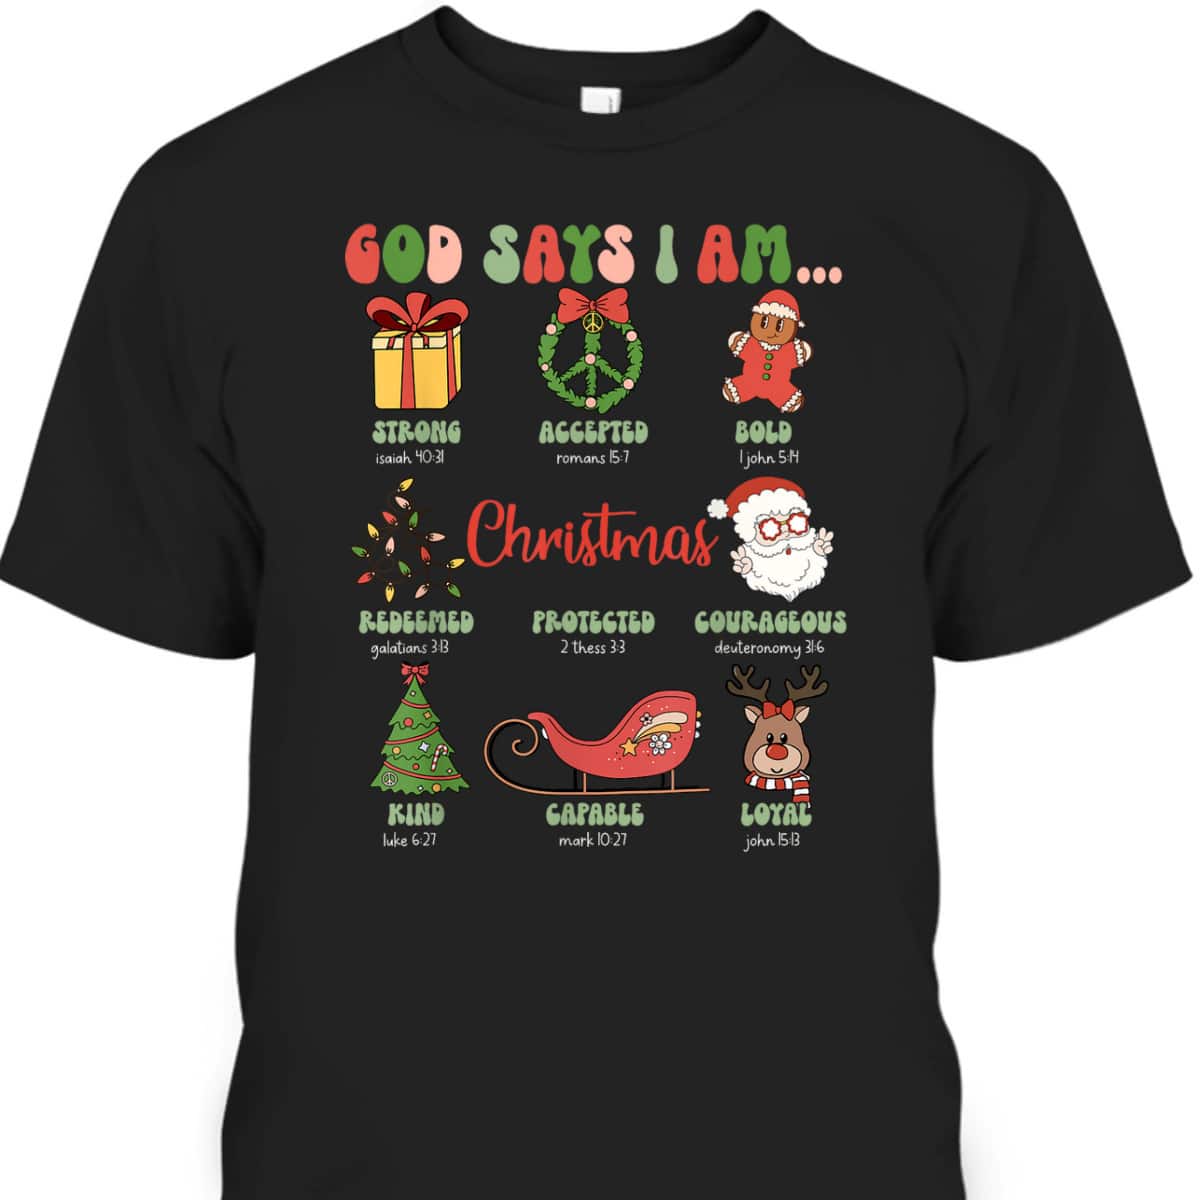 God Says I Am Christmas Bible Verse Christian Groovy Family T-Shirt